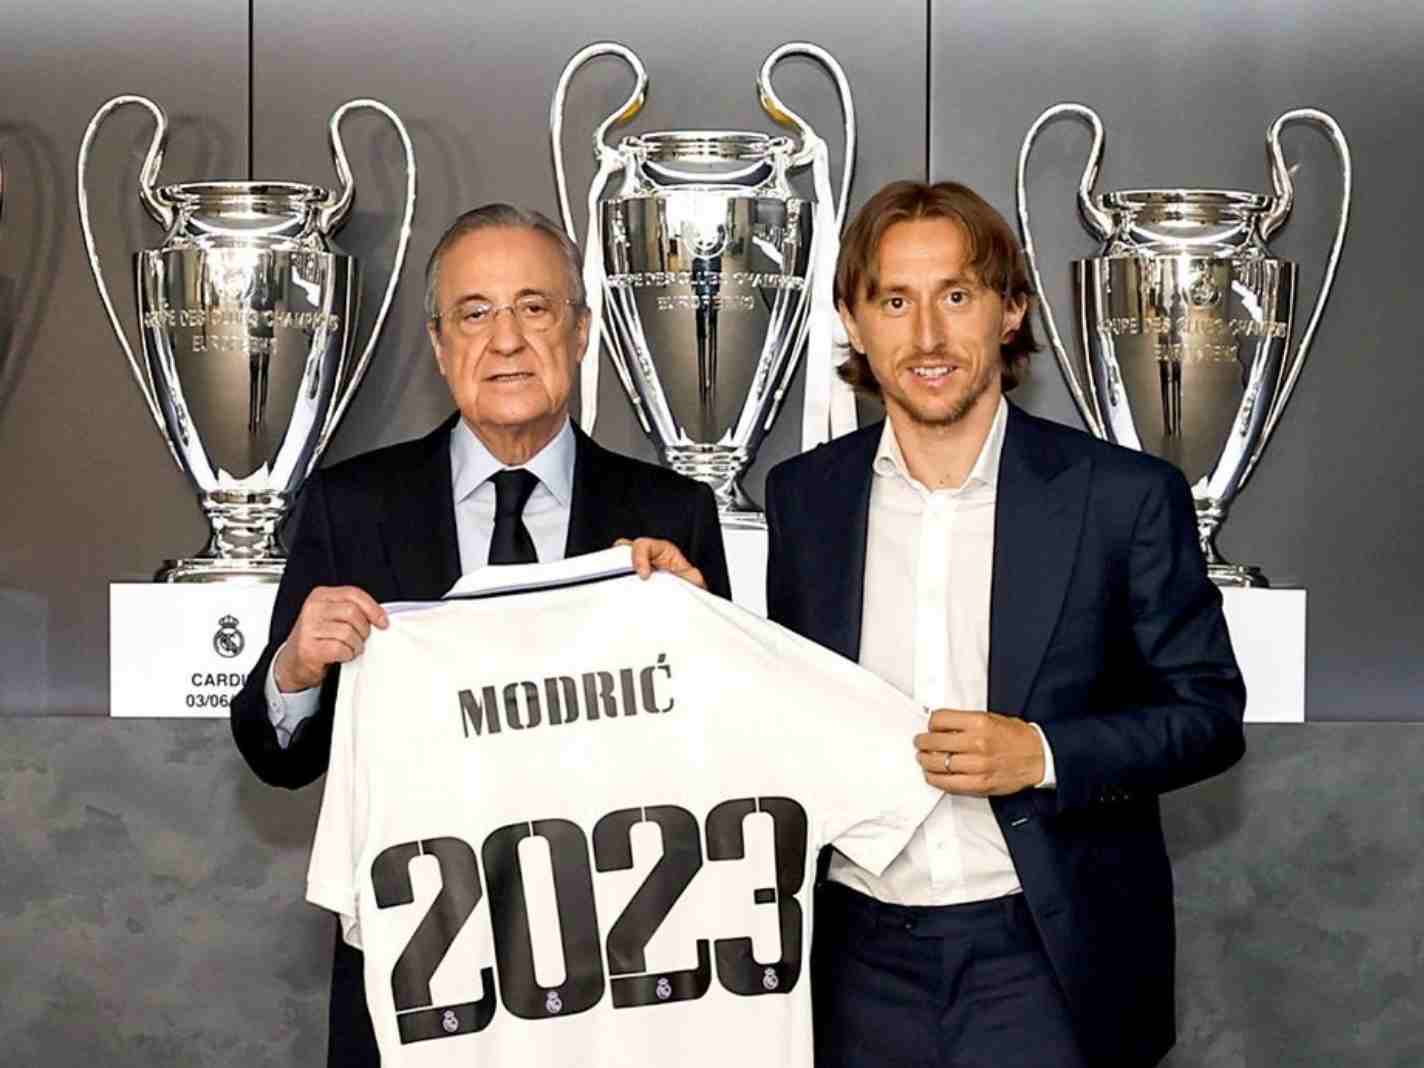 Florentino Perez and Luka Modric holding a 'Modric 2023' shirt